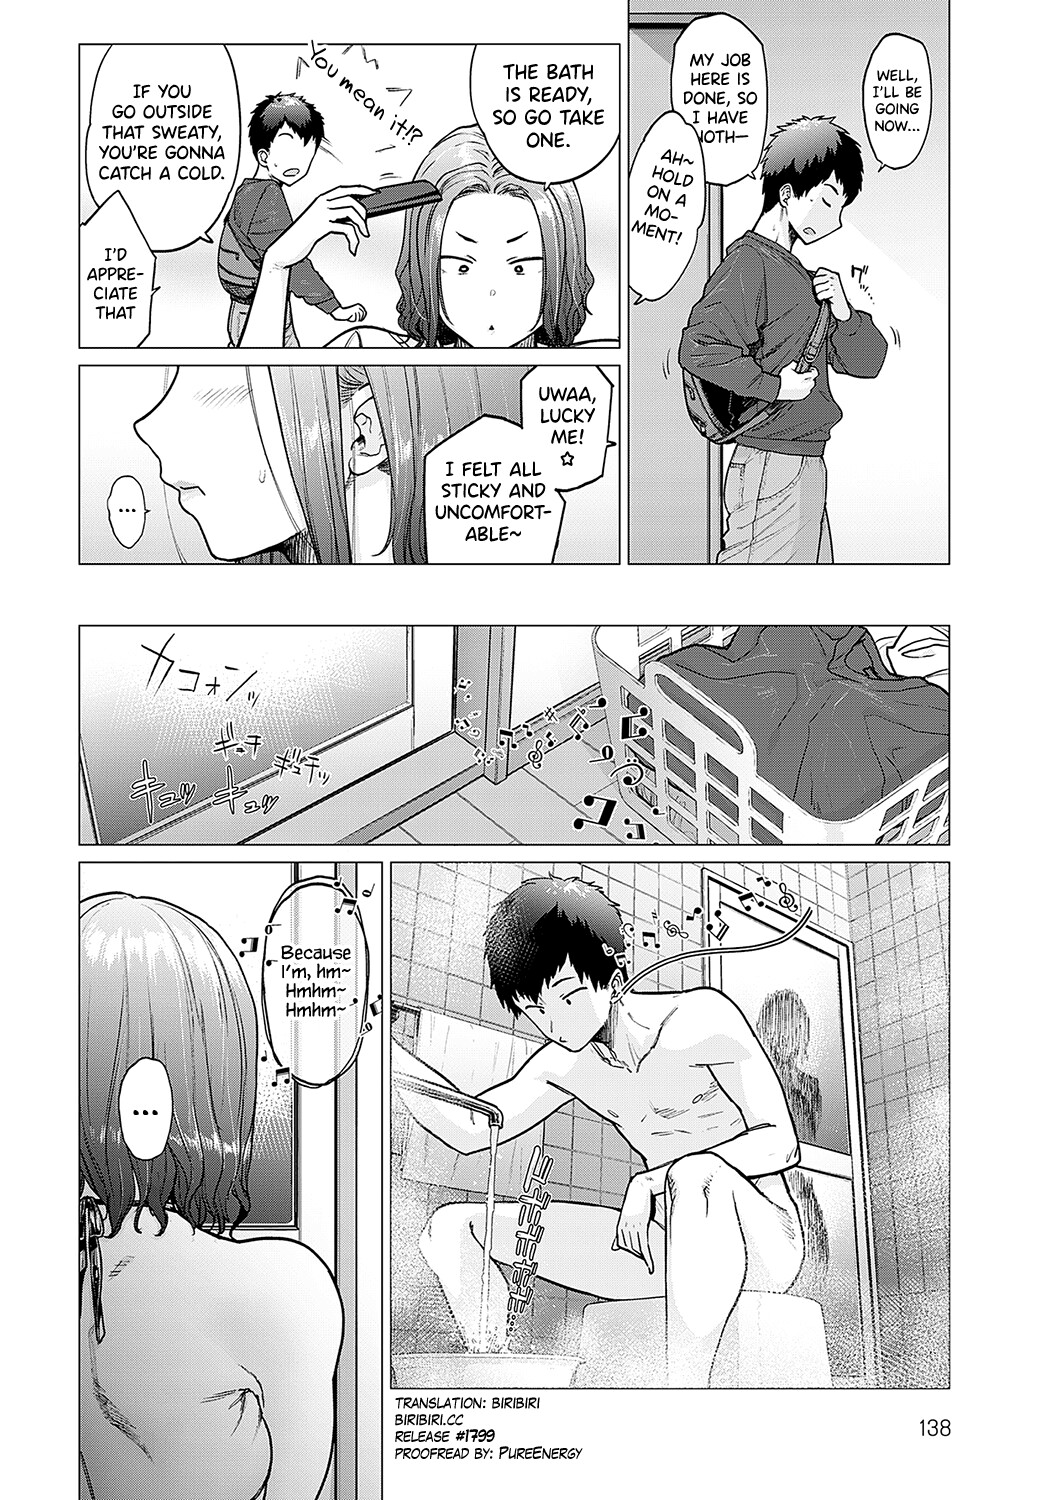 Hentai Manga Comic-Do You Have Good Hot Water?-Read-2